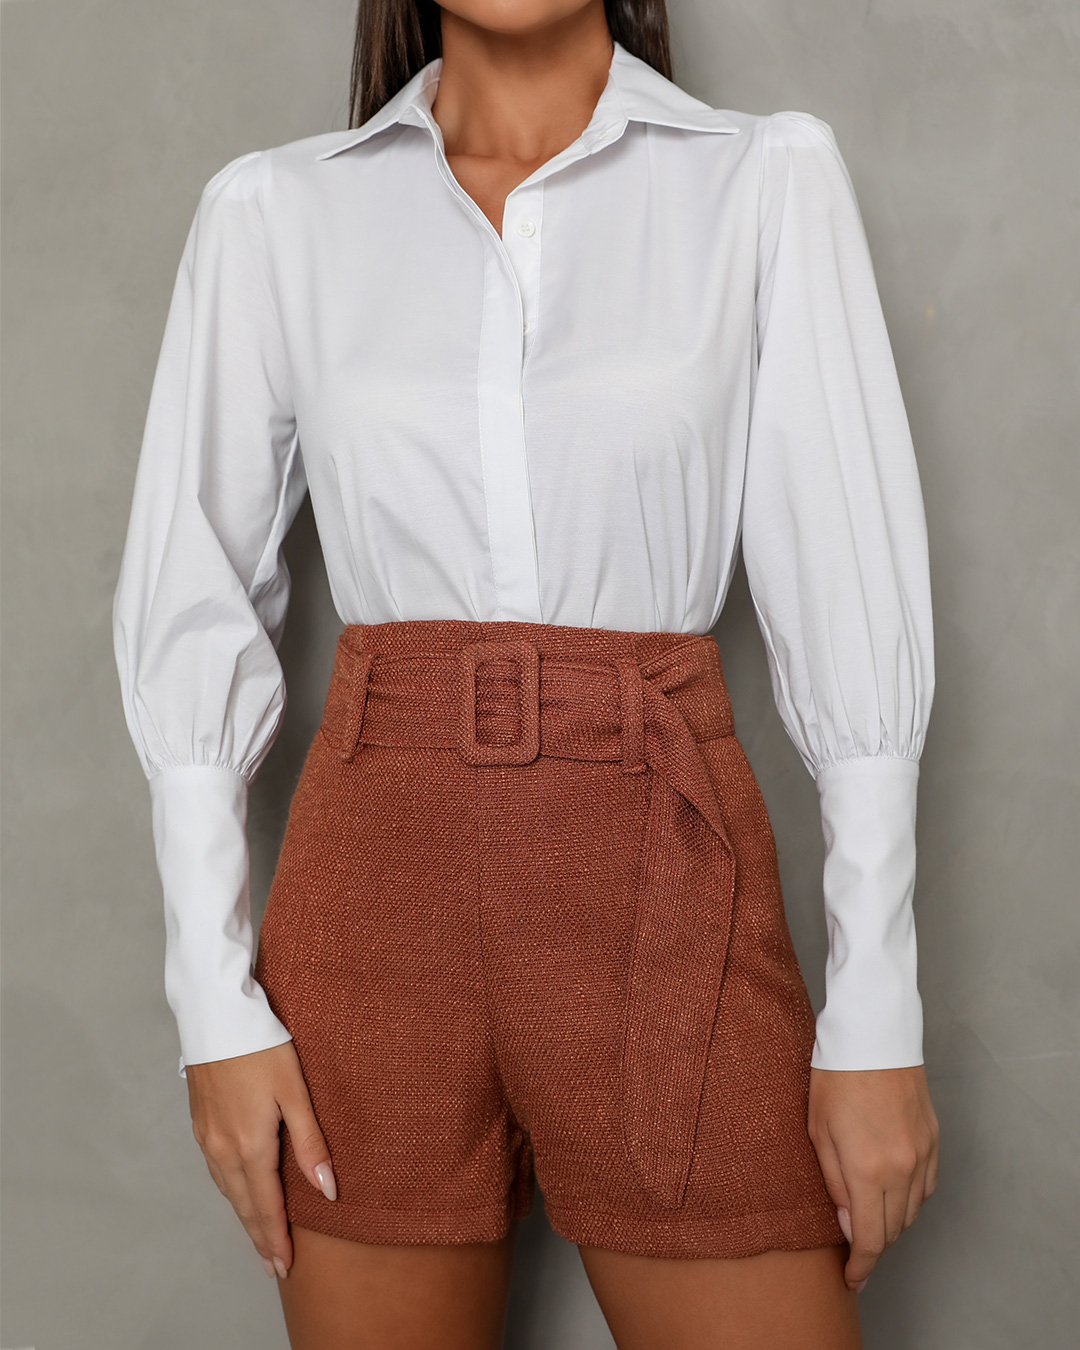 Dot Clothing - High Waist Dot Clothing Shorts Brown - 1607MARR